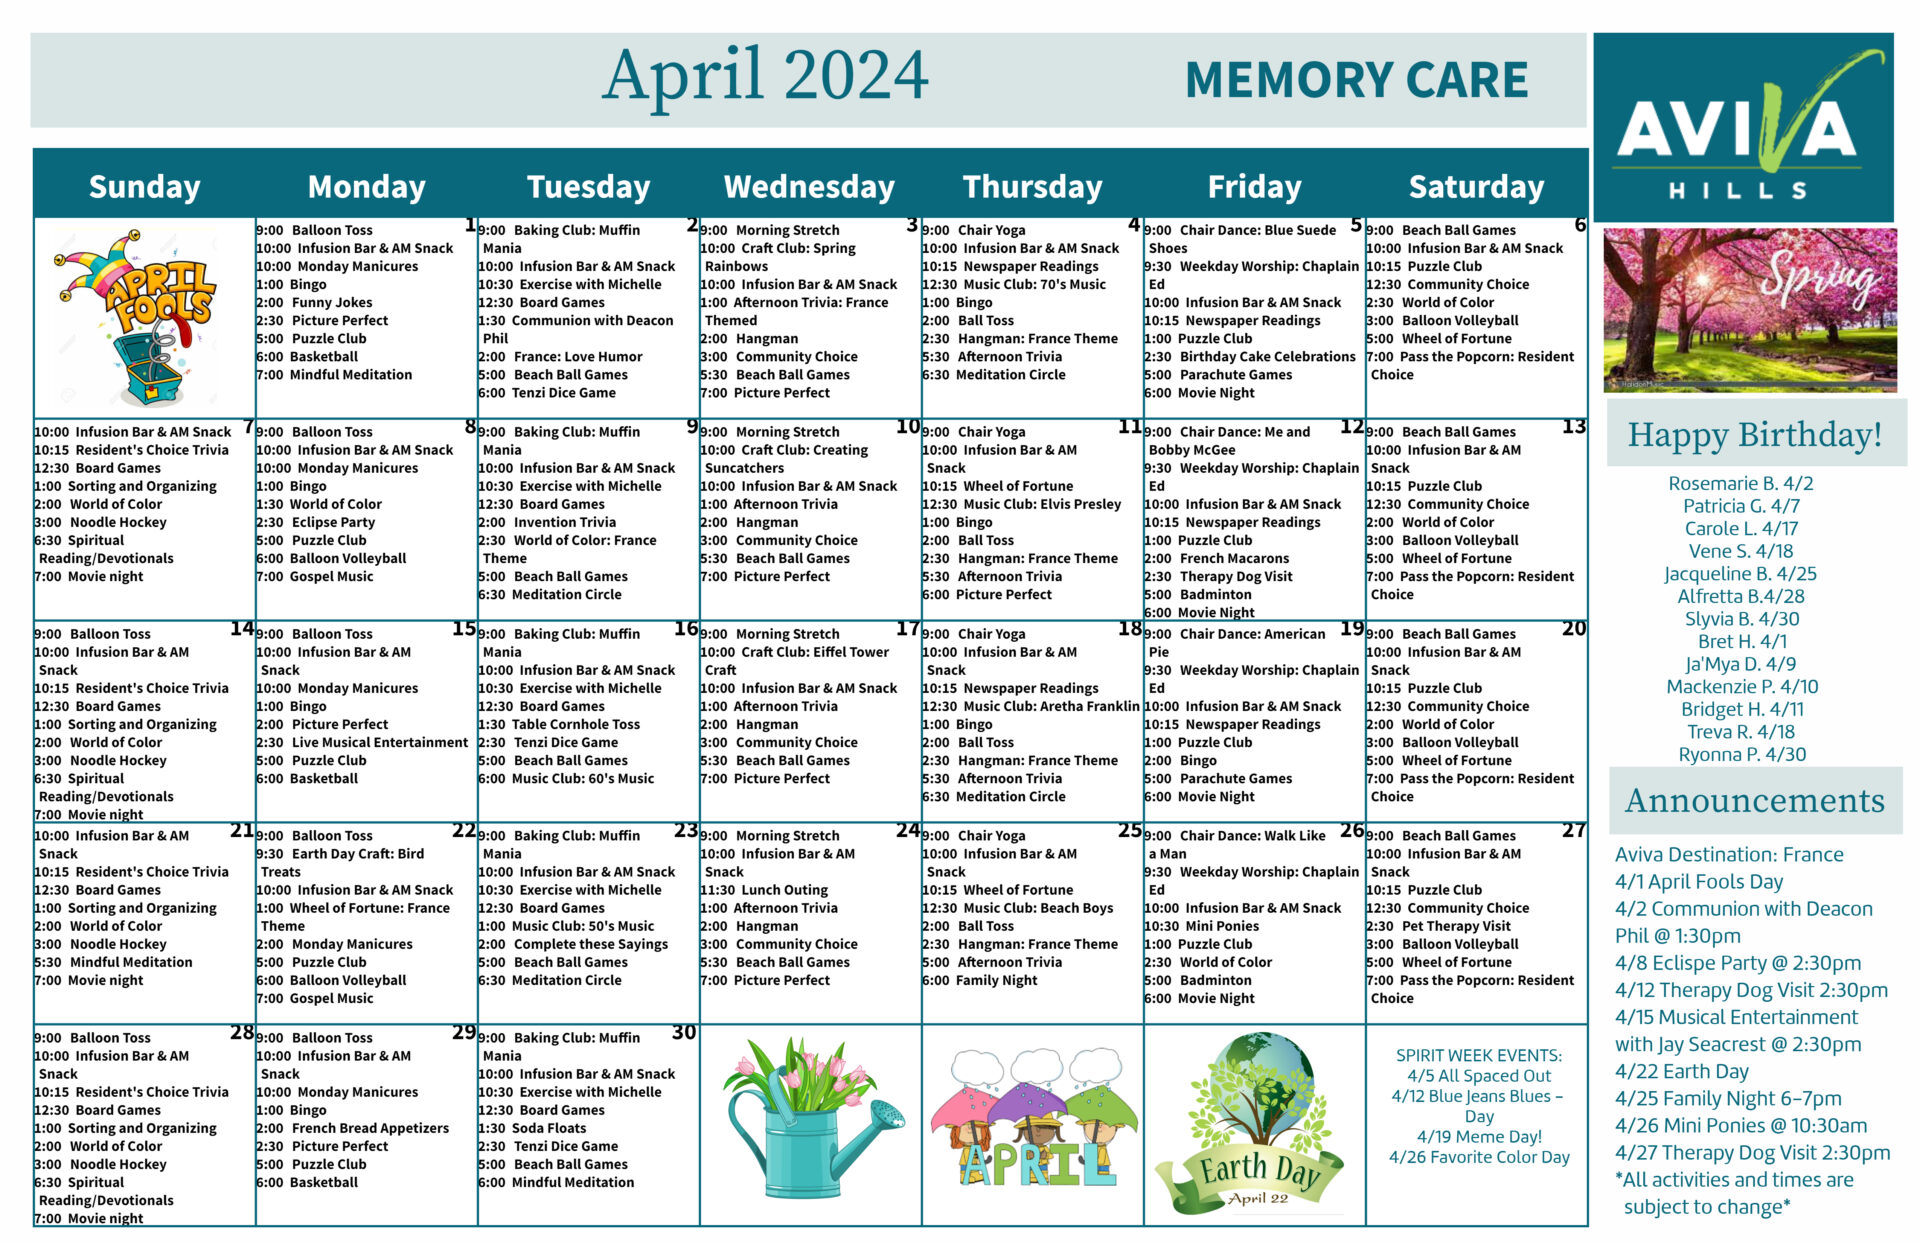 Aviva Hills Memory Care April 2024 Event Calendar